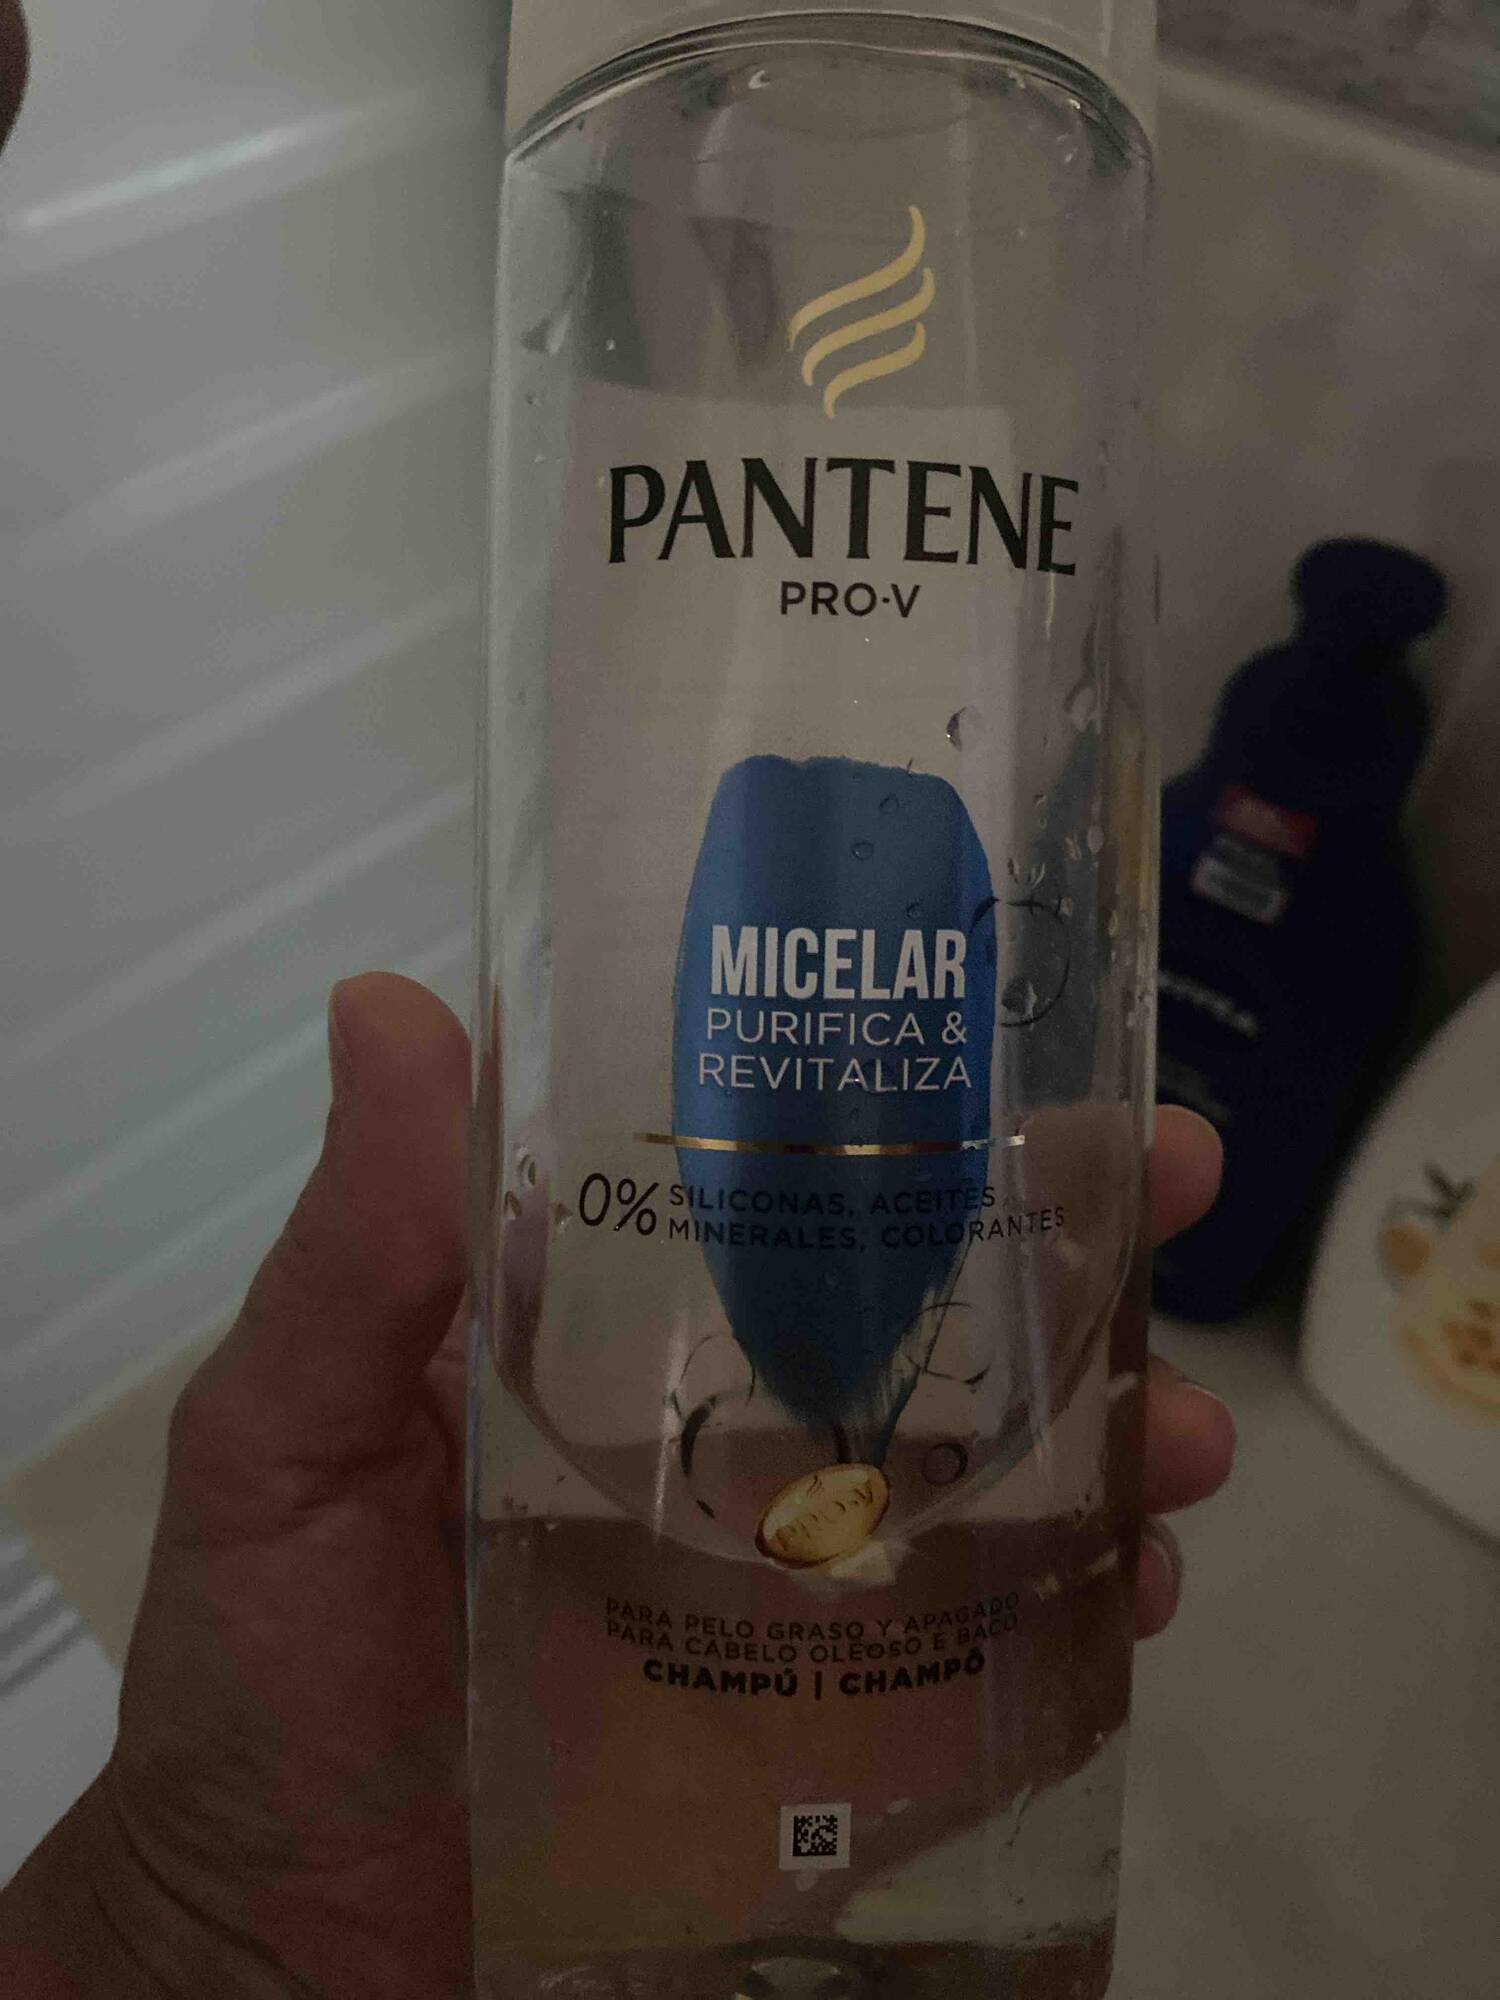 PANTENE - Micelar purifica & revitaliza - Champô